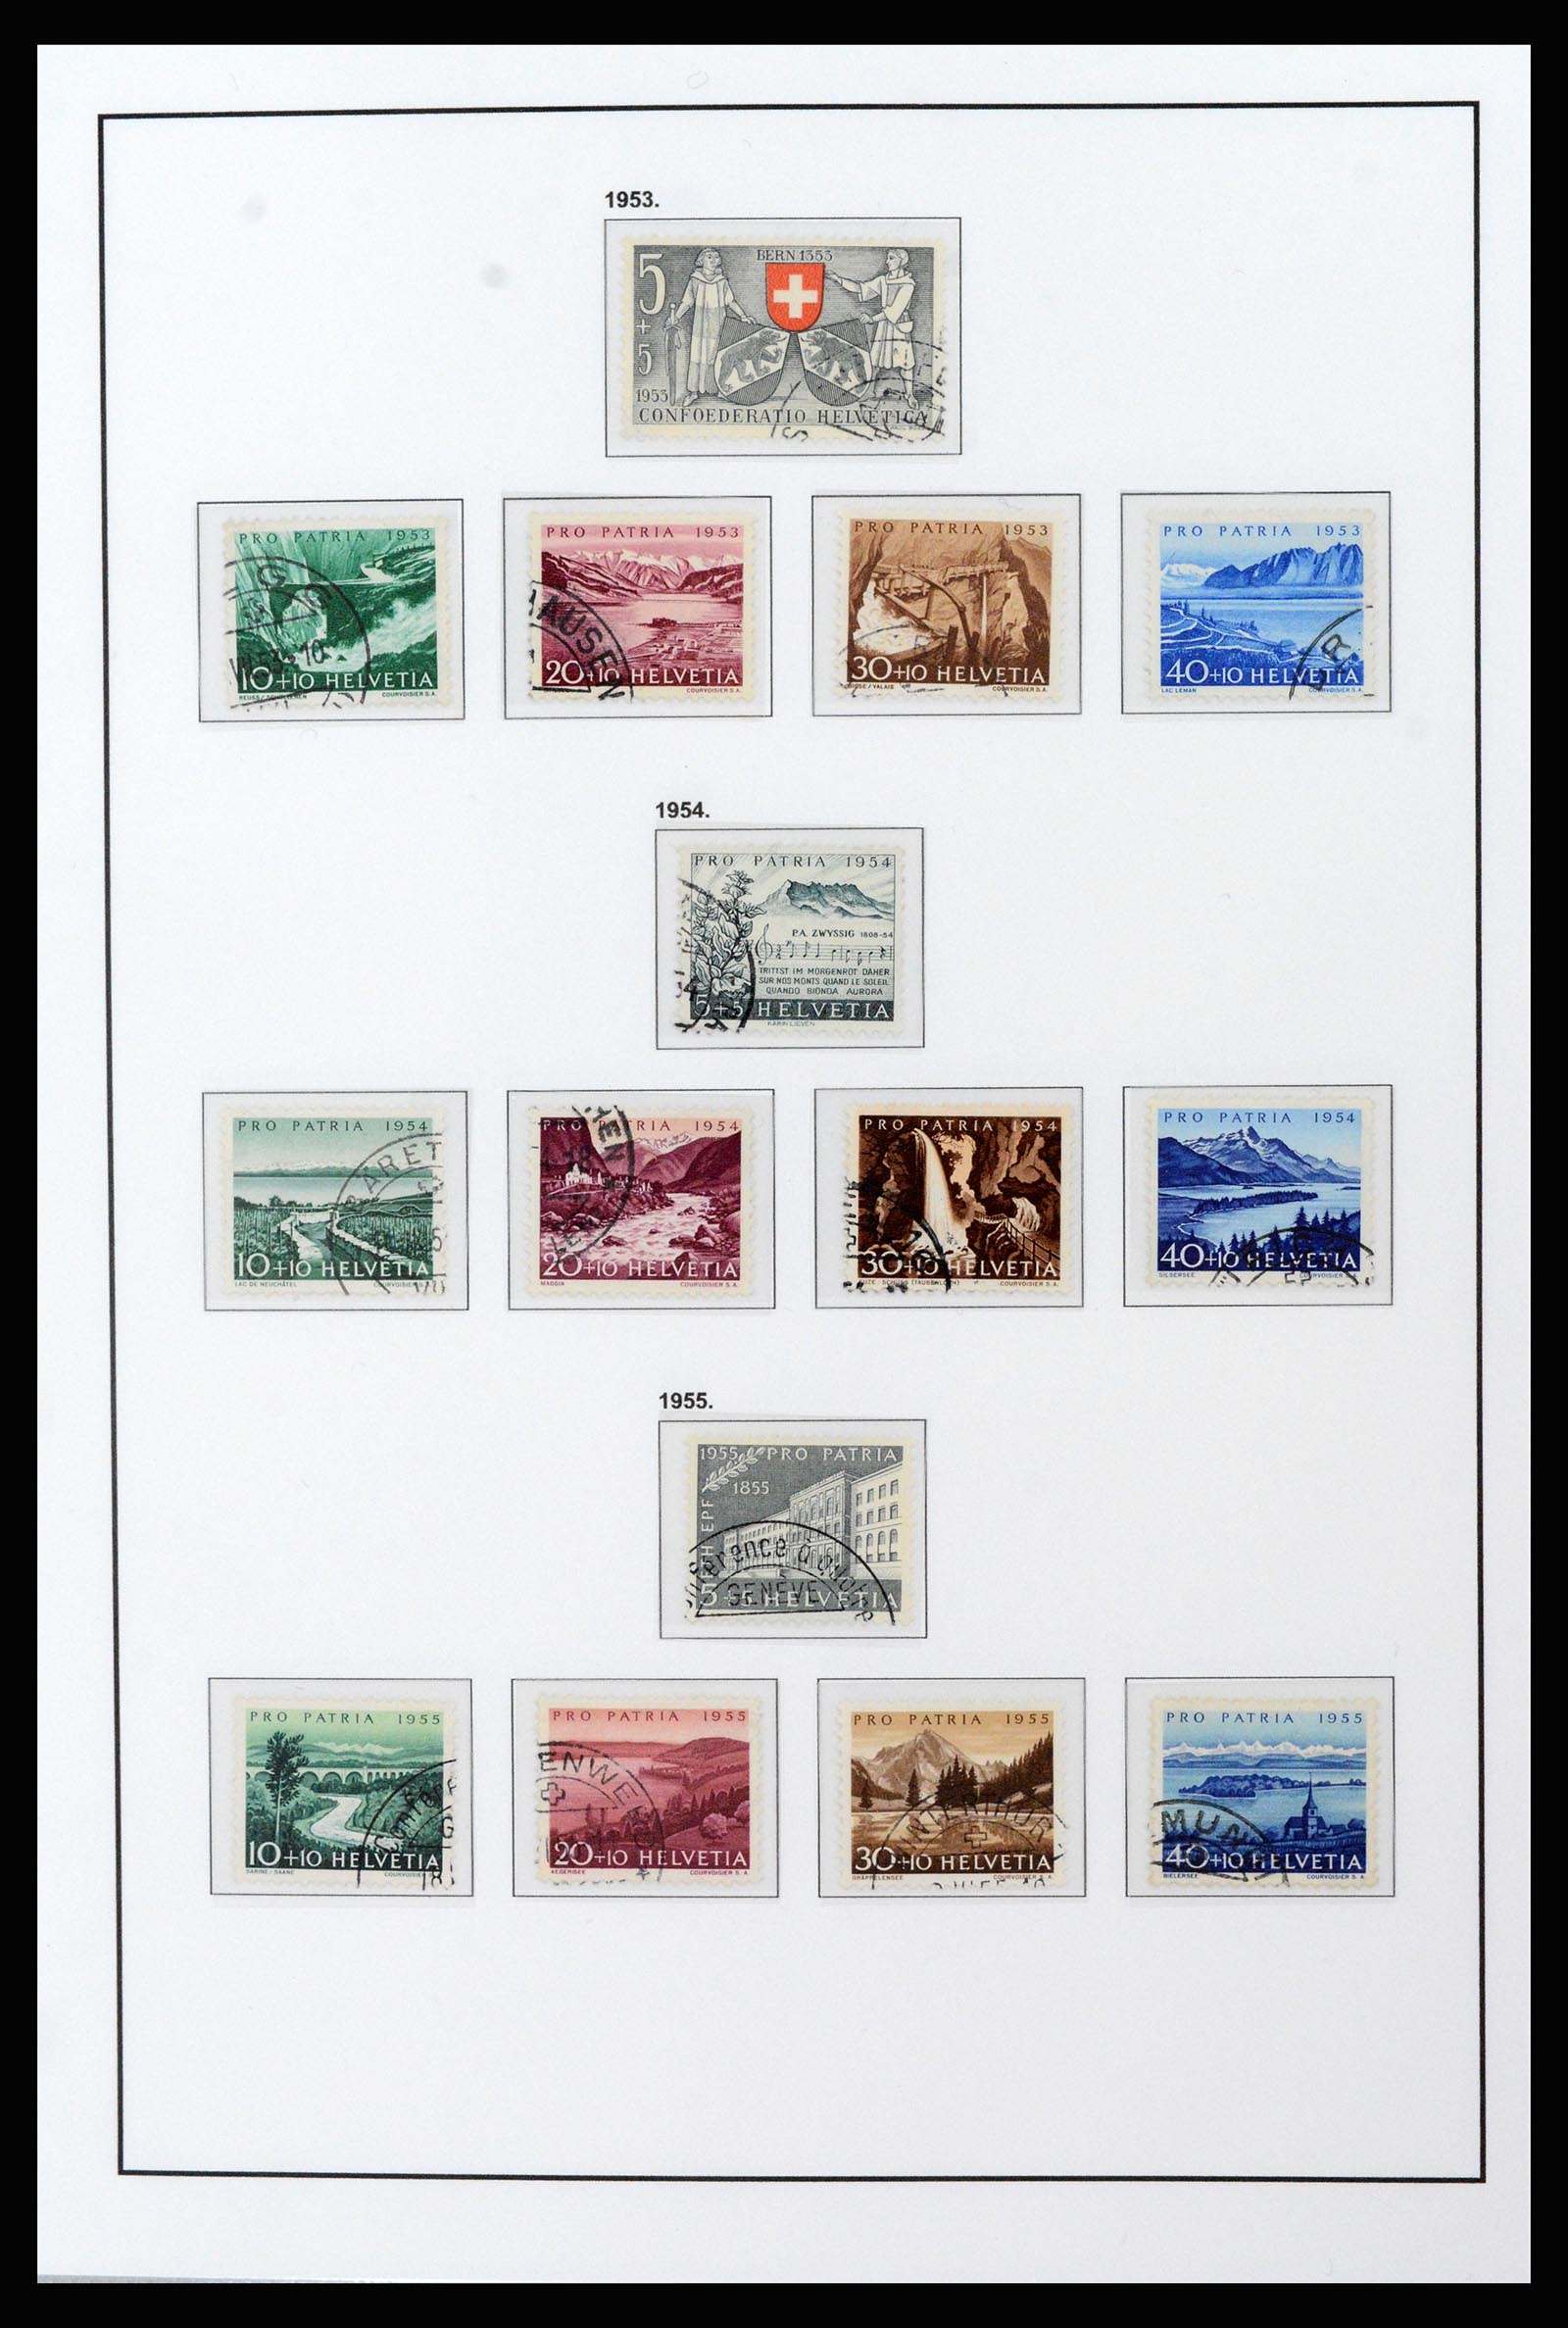 37225 080 - Stamp collection 37225 Switzerland 1854-2020.